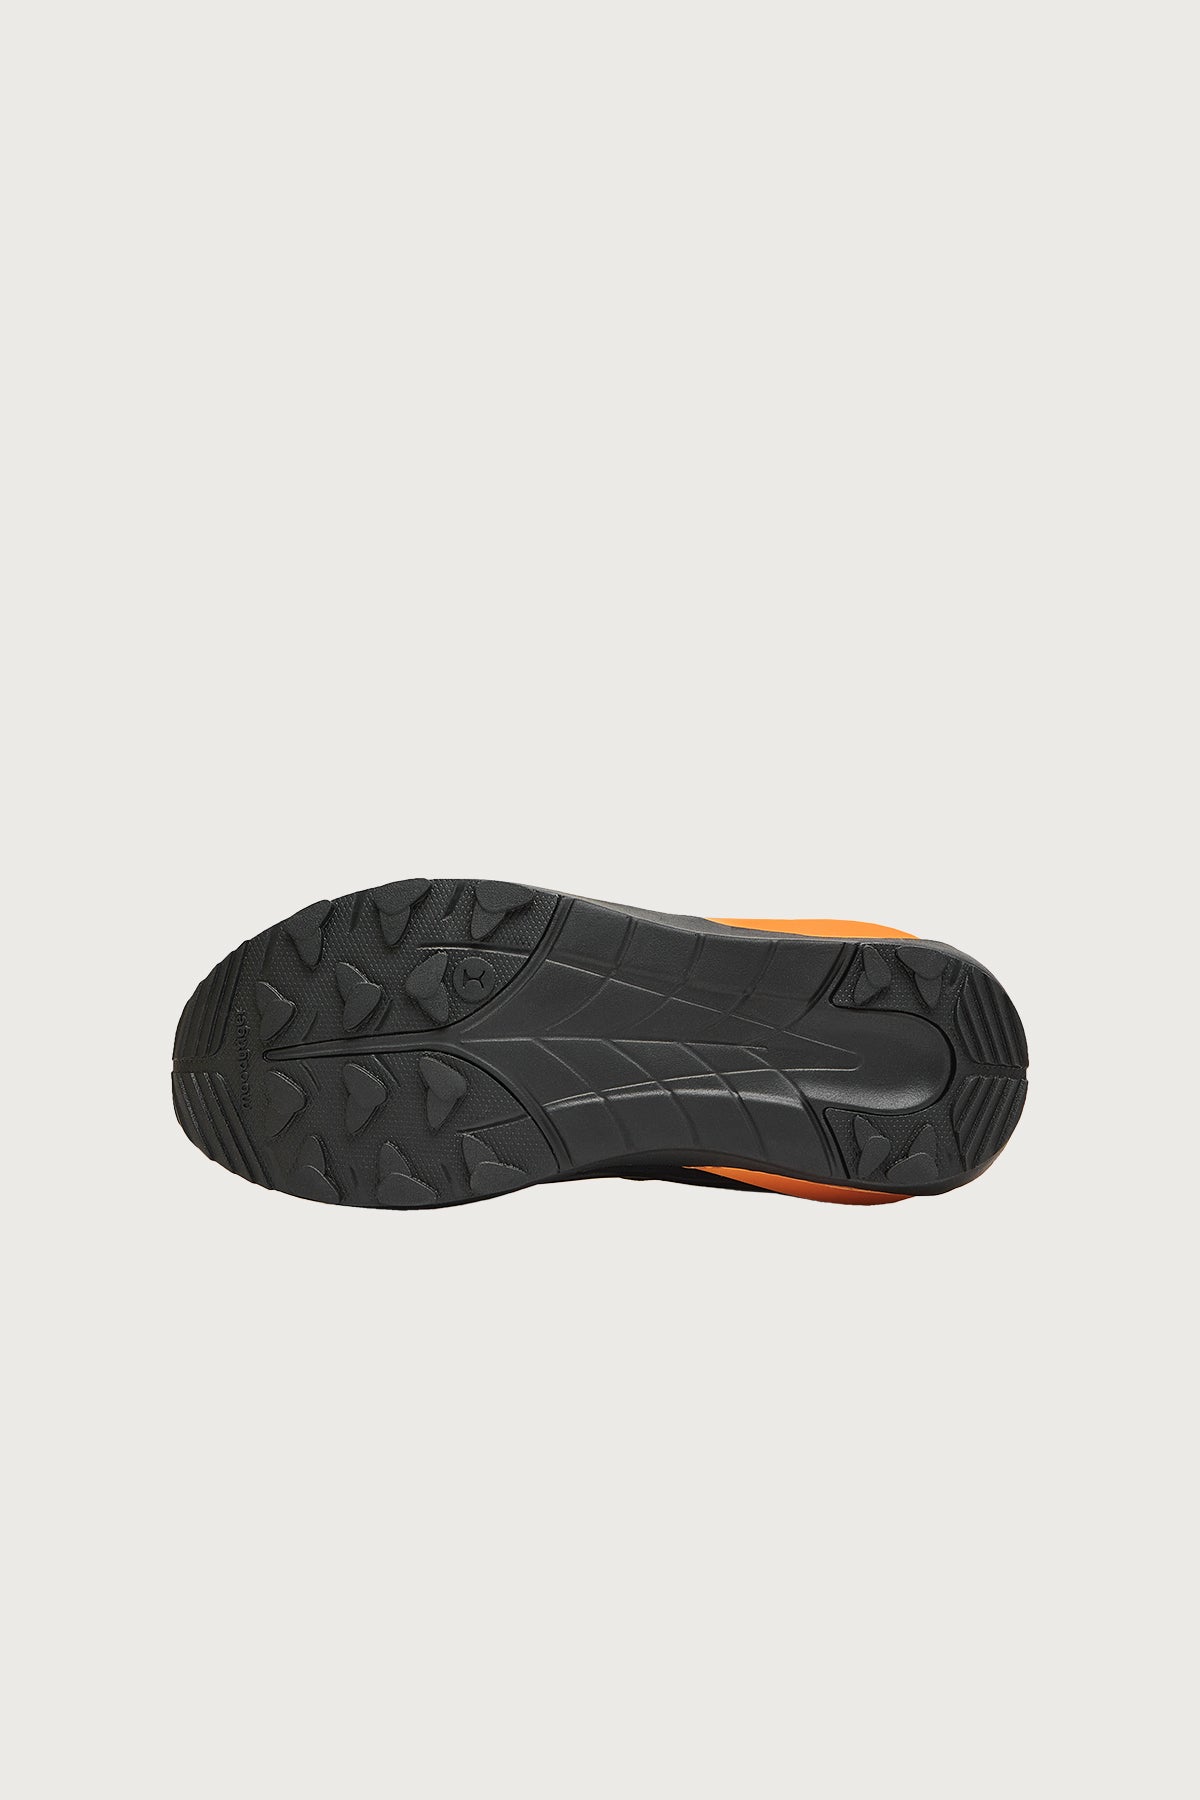 SWINGY Q 3.0 Kids' Shoes**Charcoal Black**